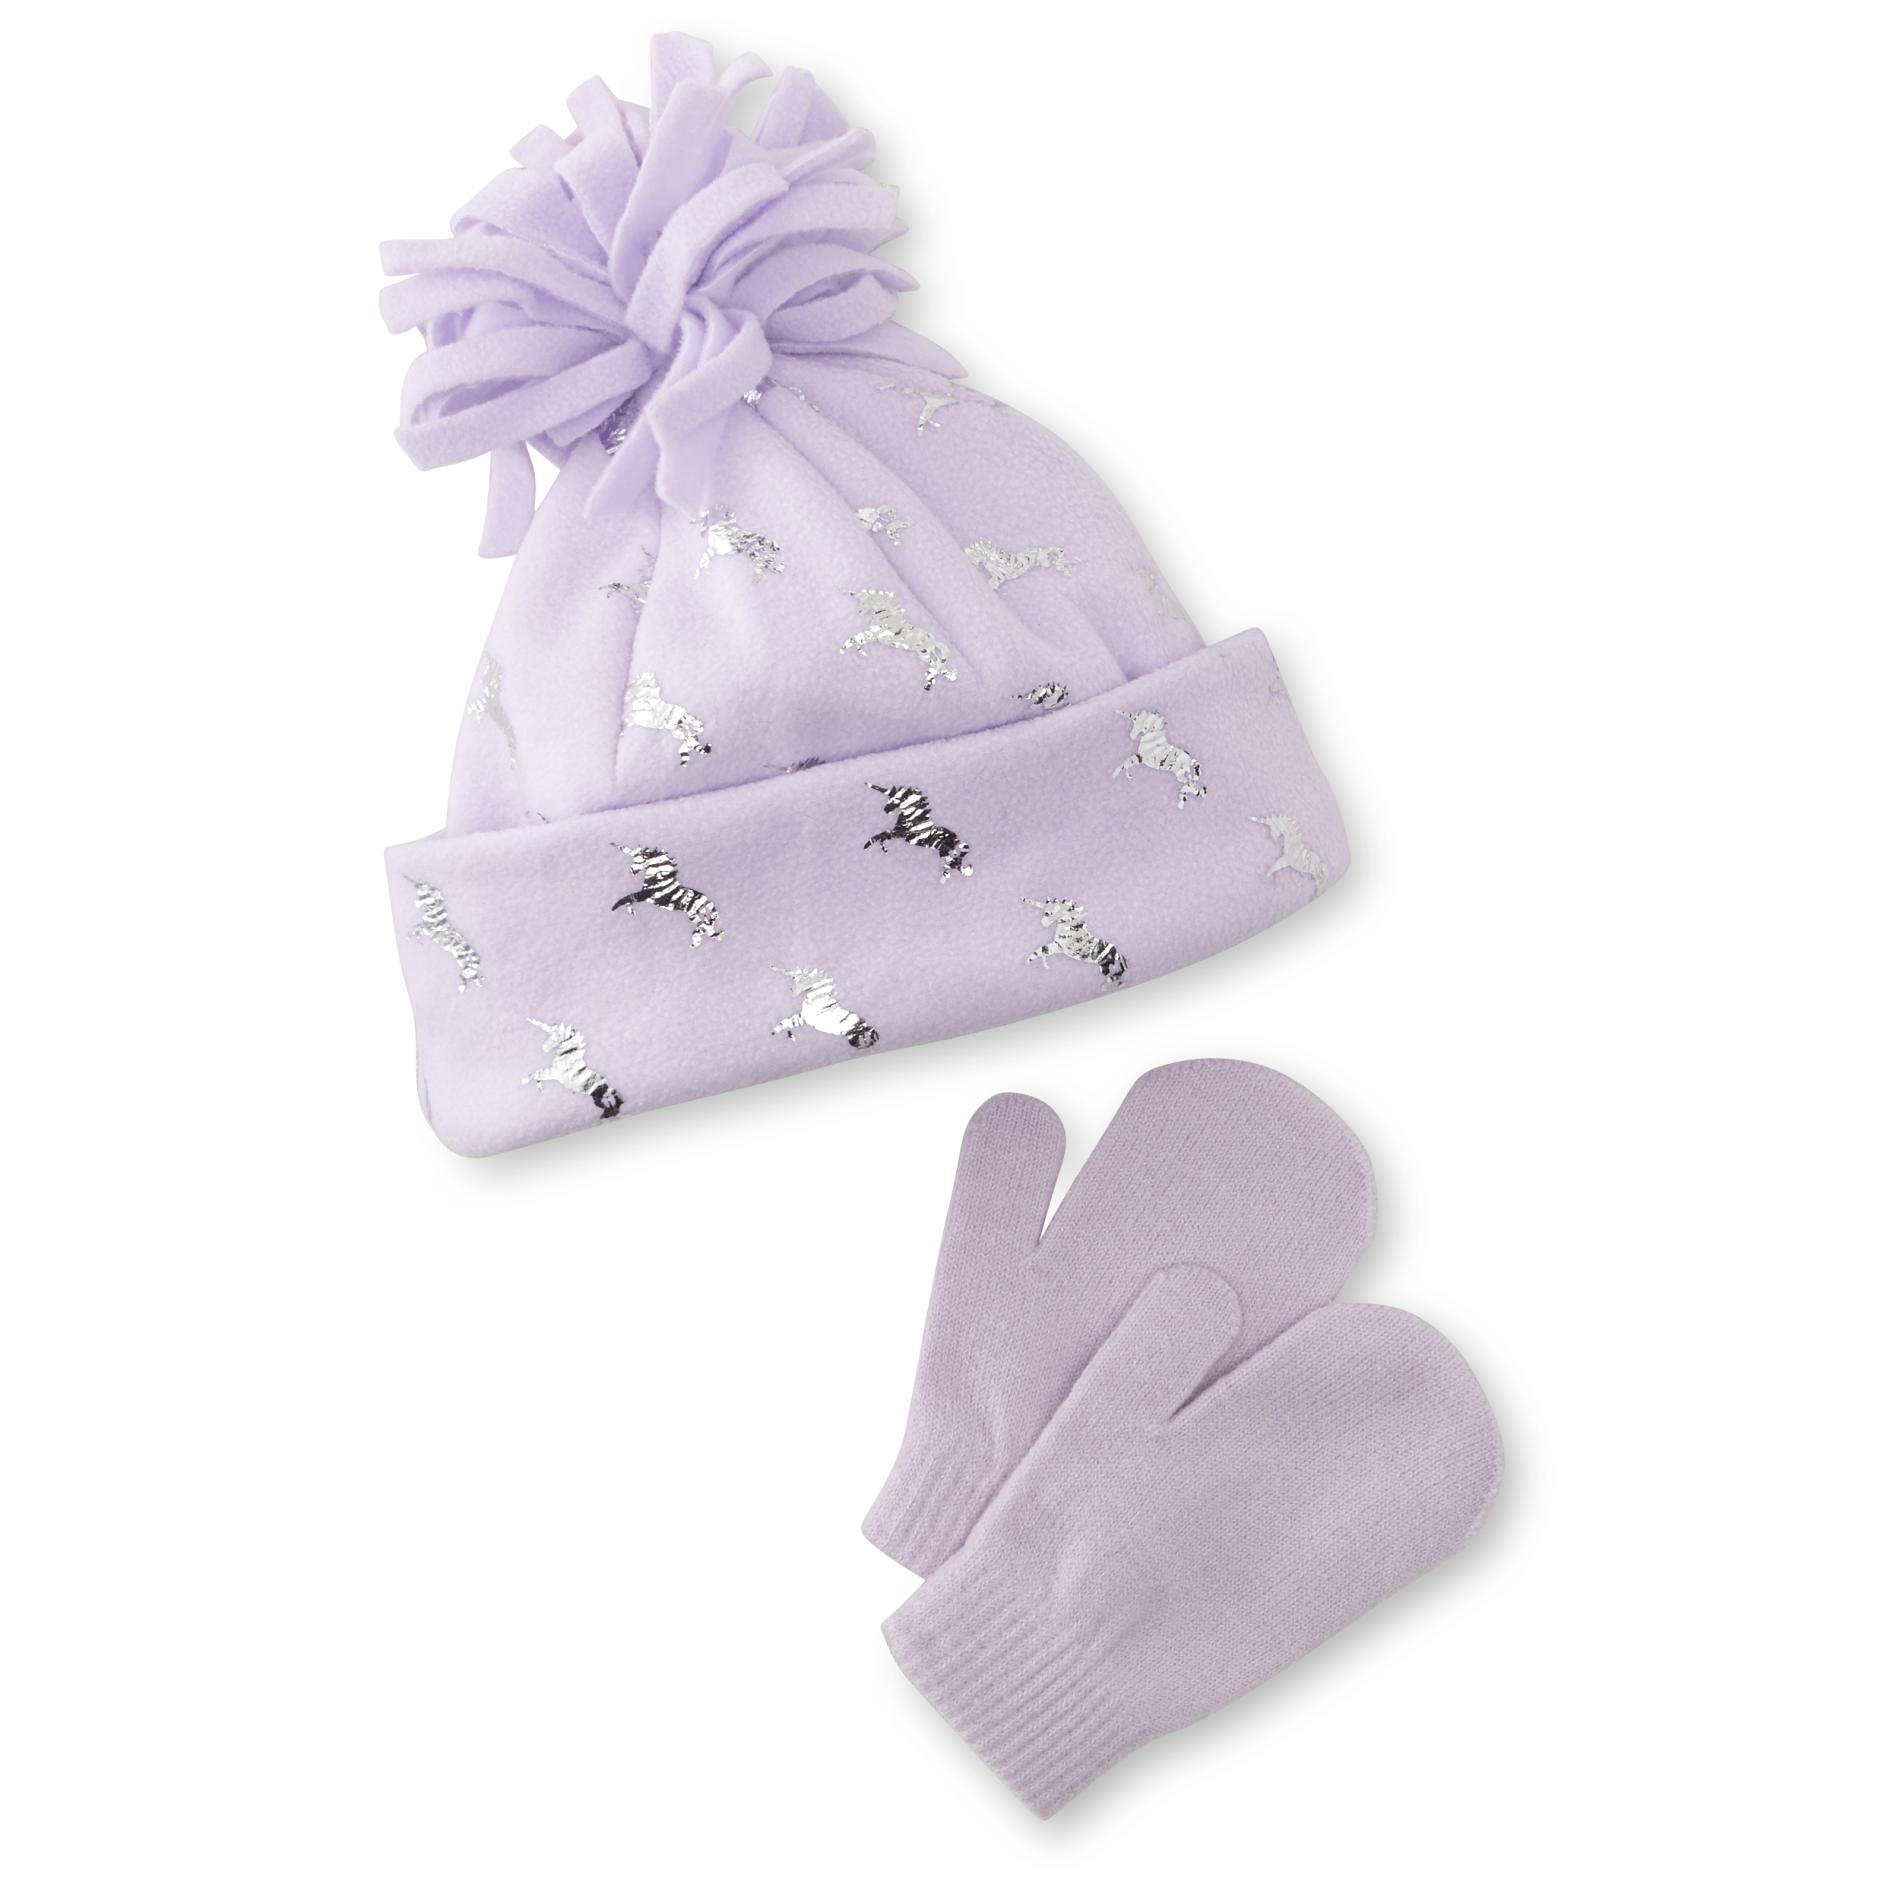 Simply Styled Toddler Girls' Fleece Beanie Hat & Stretch Knit Mittens - Unicorns